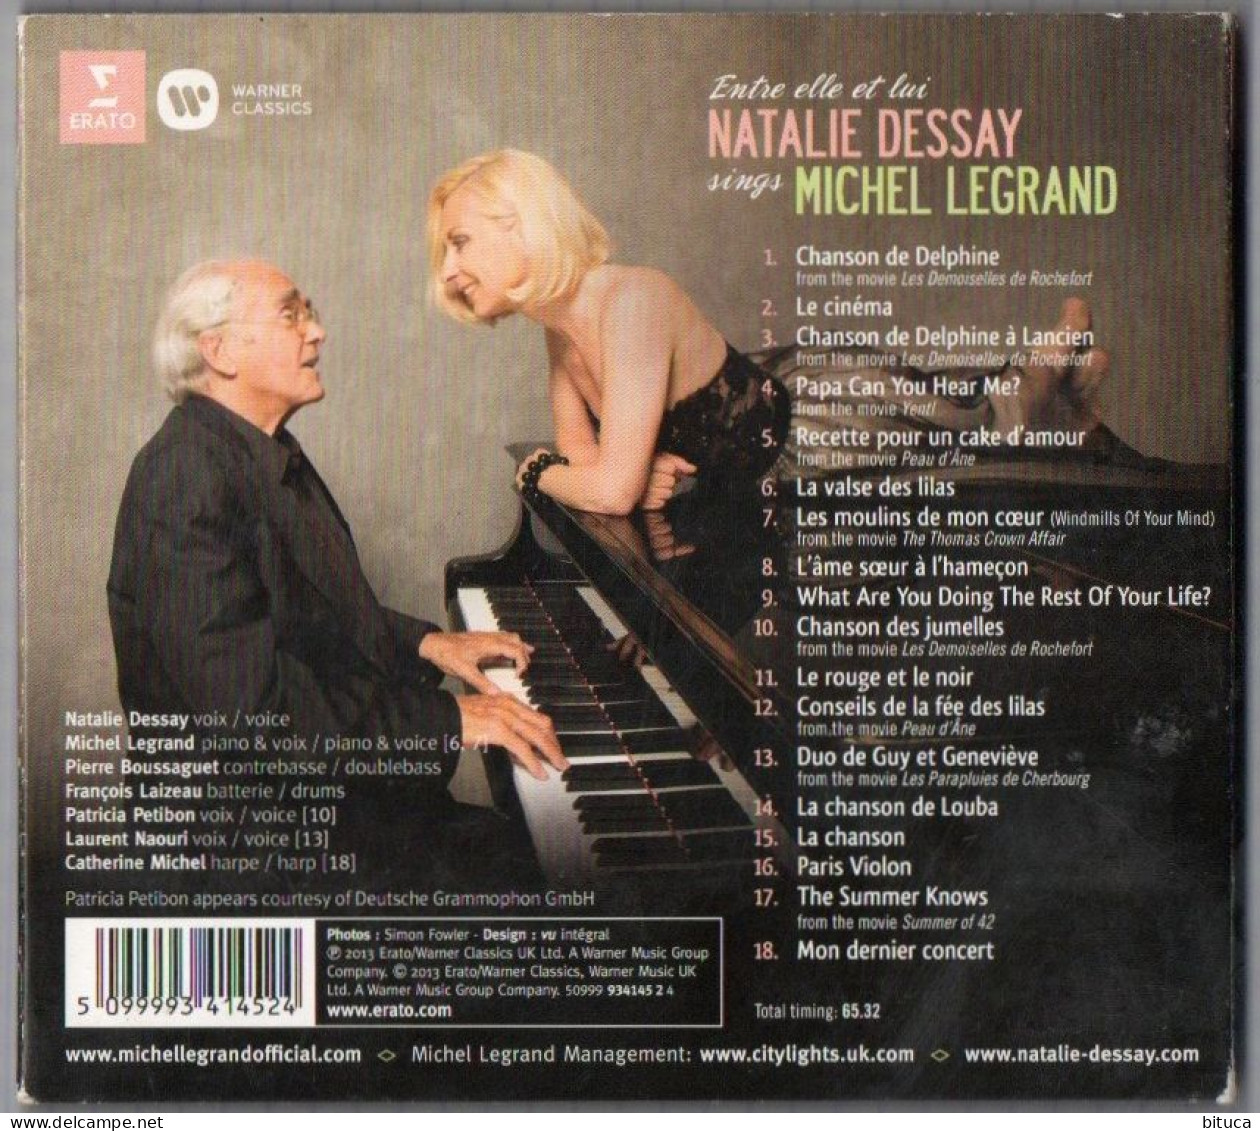 CD 18 TITRES NATALIE DESSAY & MICHEL LEGRAND ENTRE ELLE ET LUI ERATO WARNER CLASSICS - Jazz